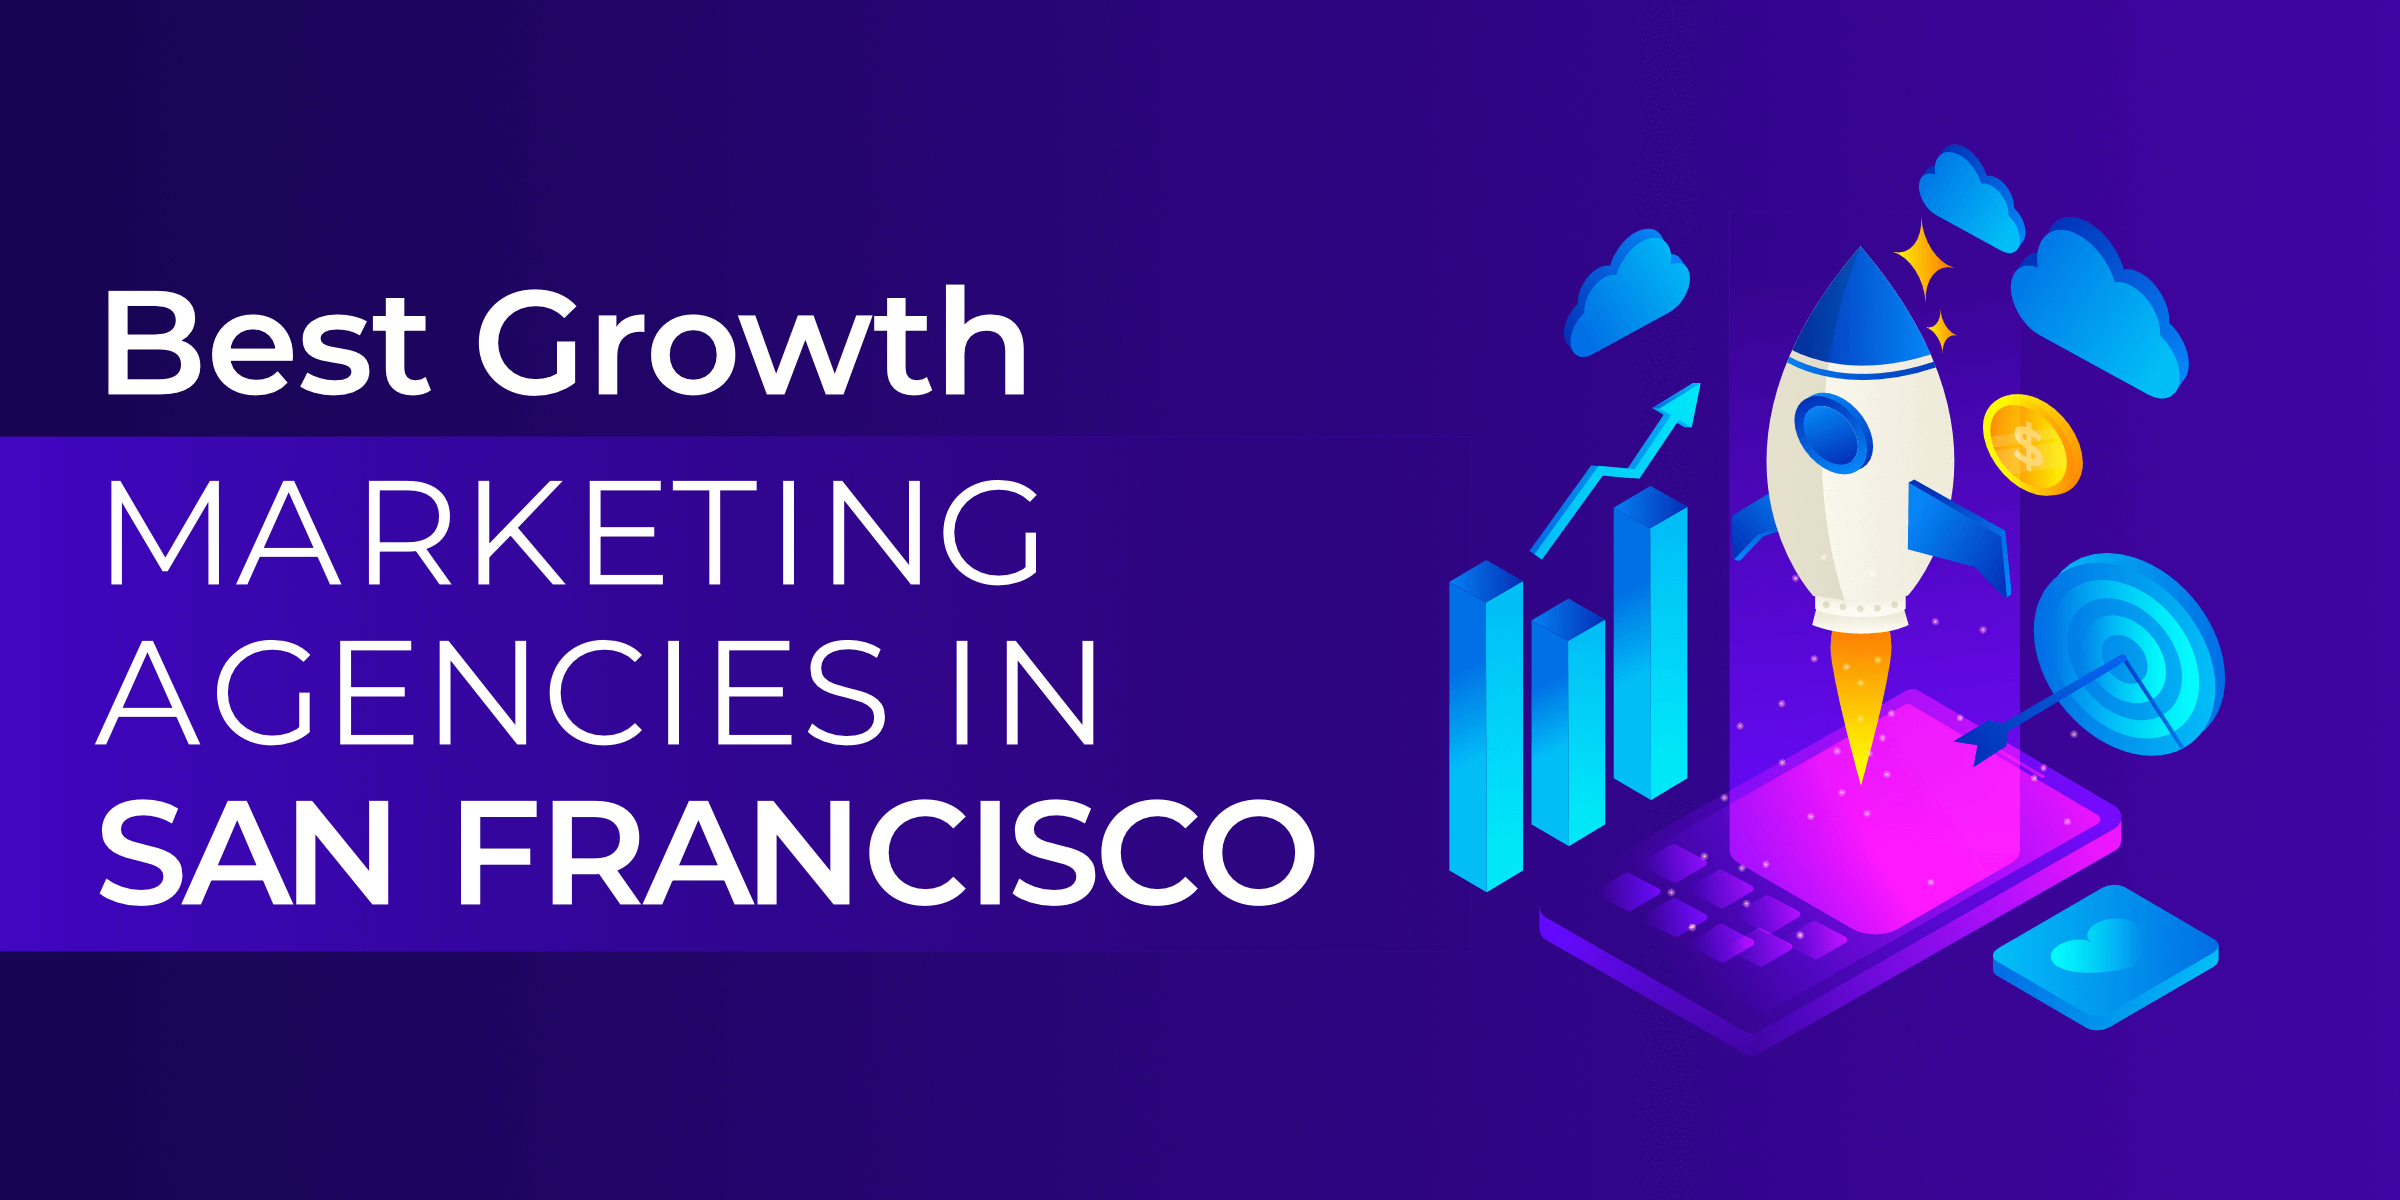 Best Growth Marketing Agencies in San Francisco